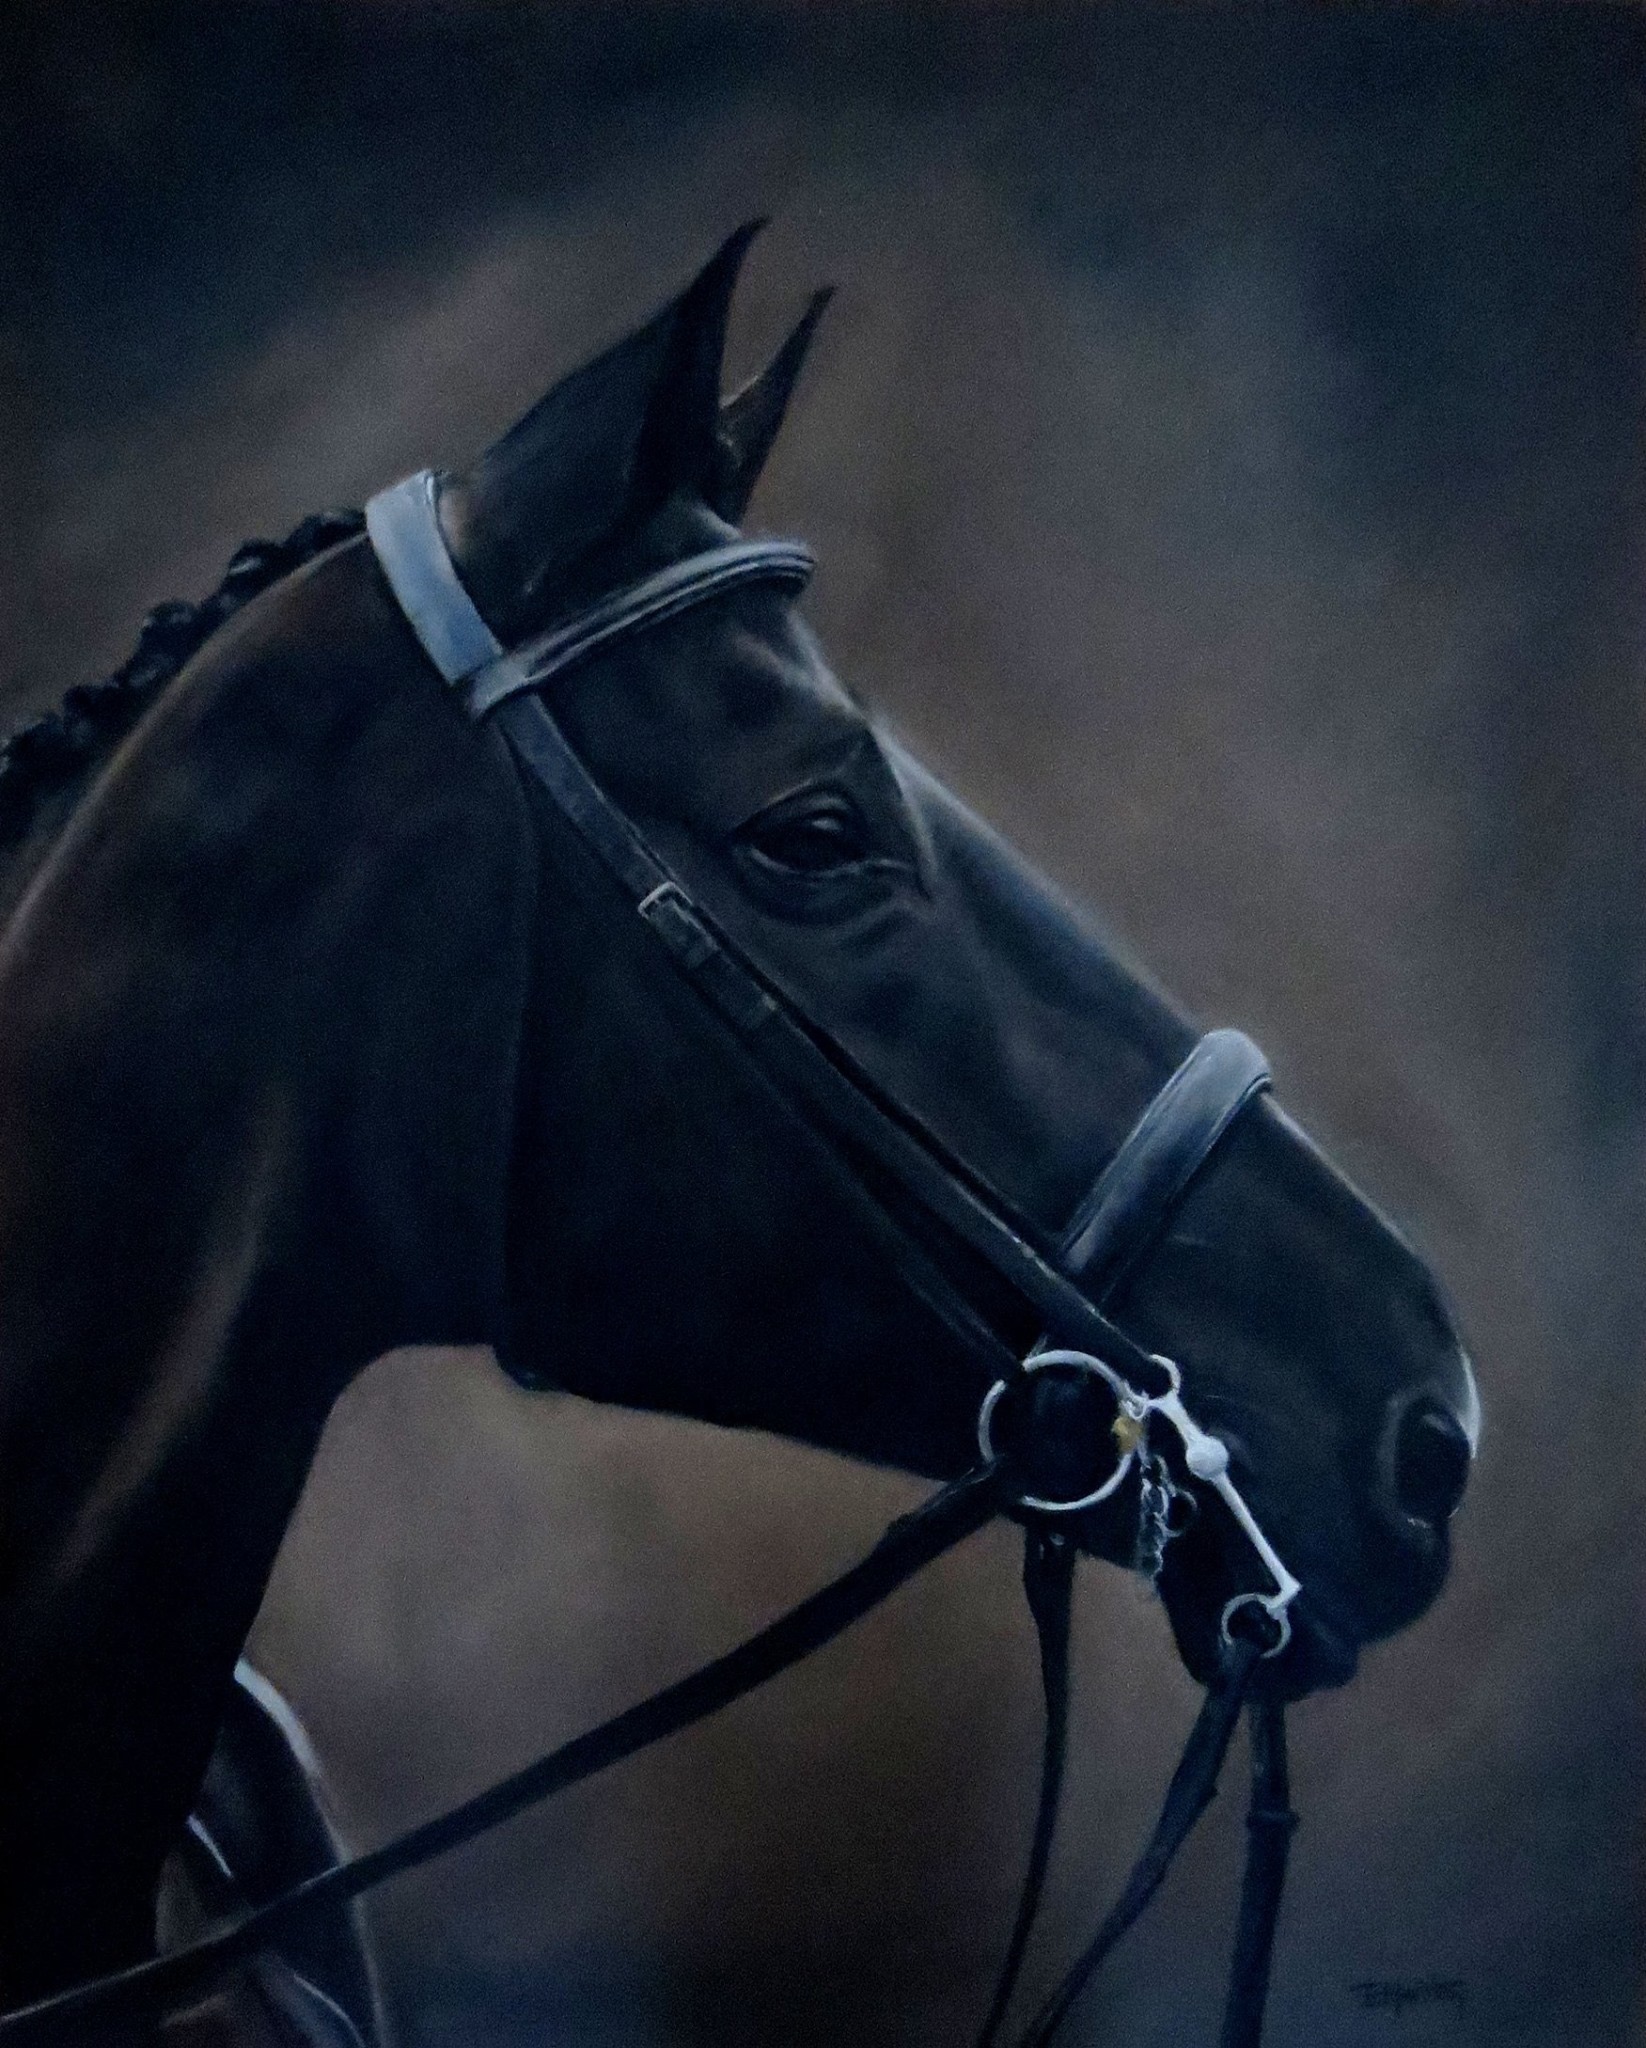 Commission - Horse